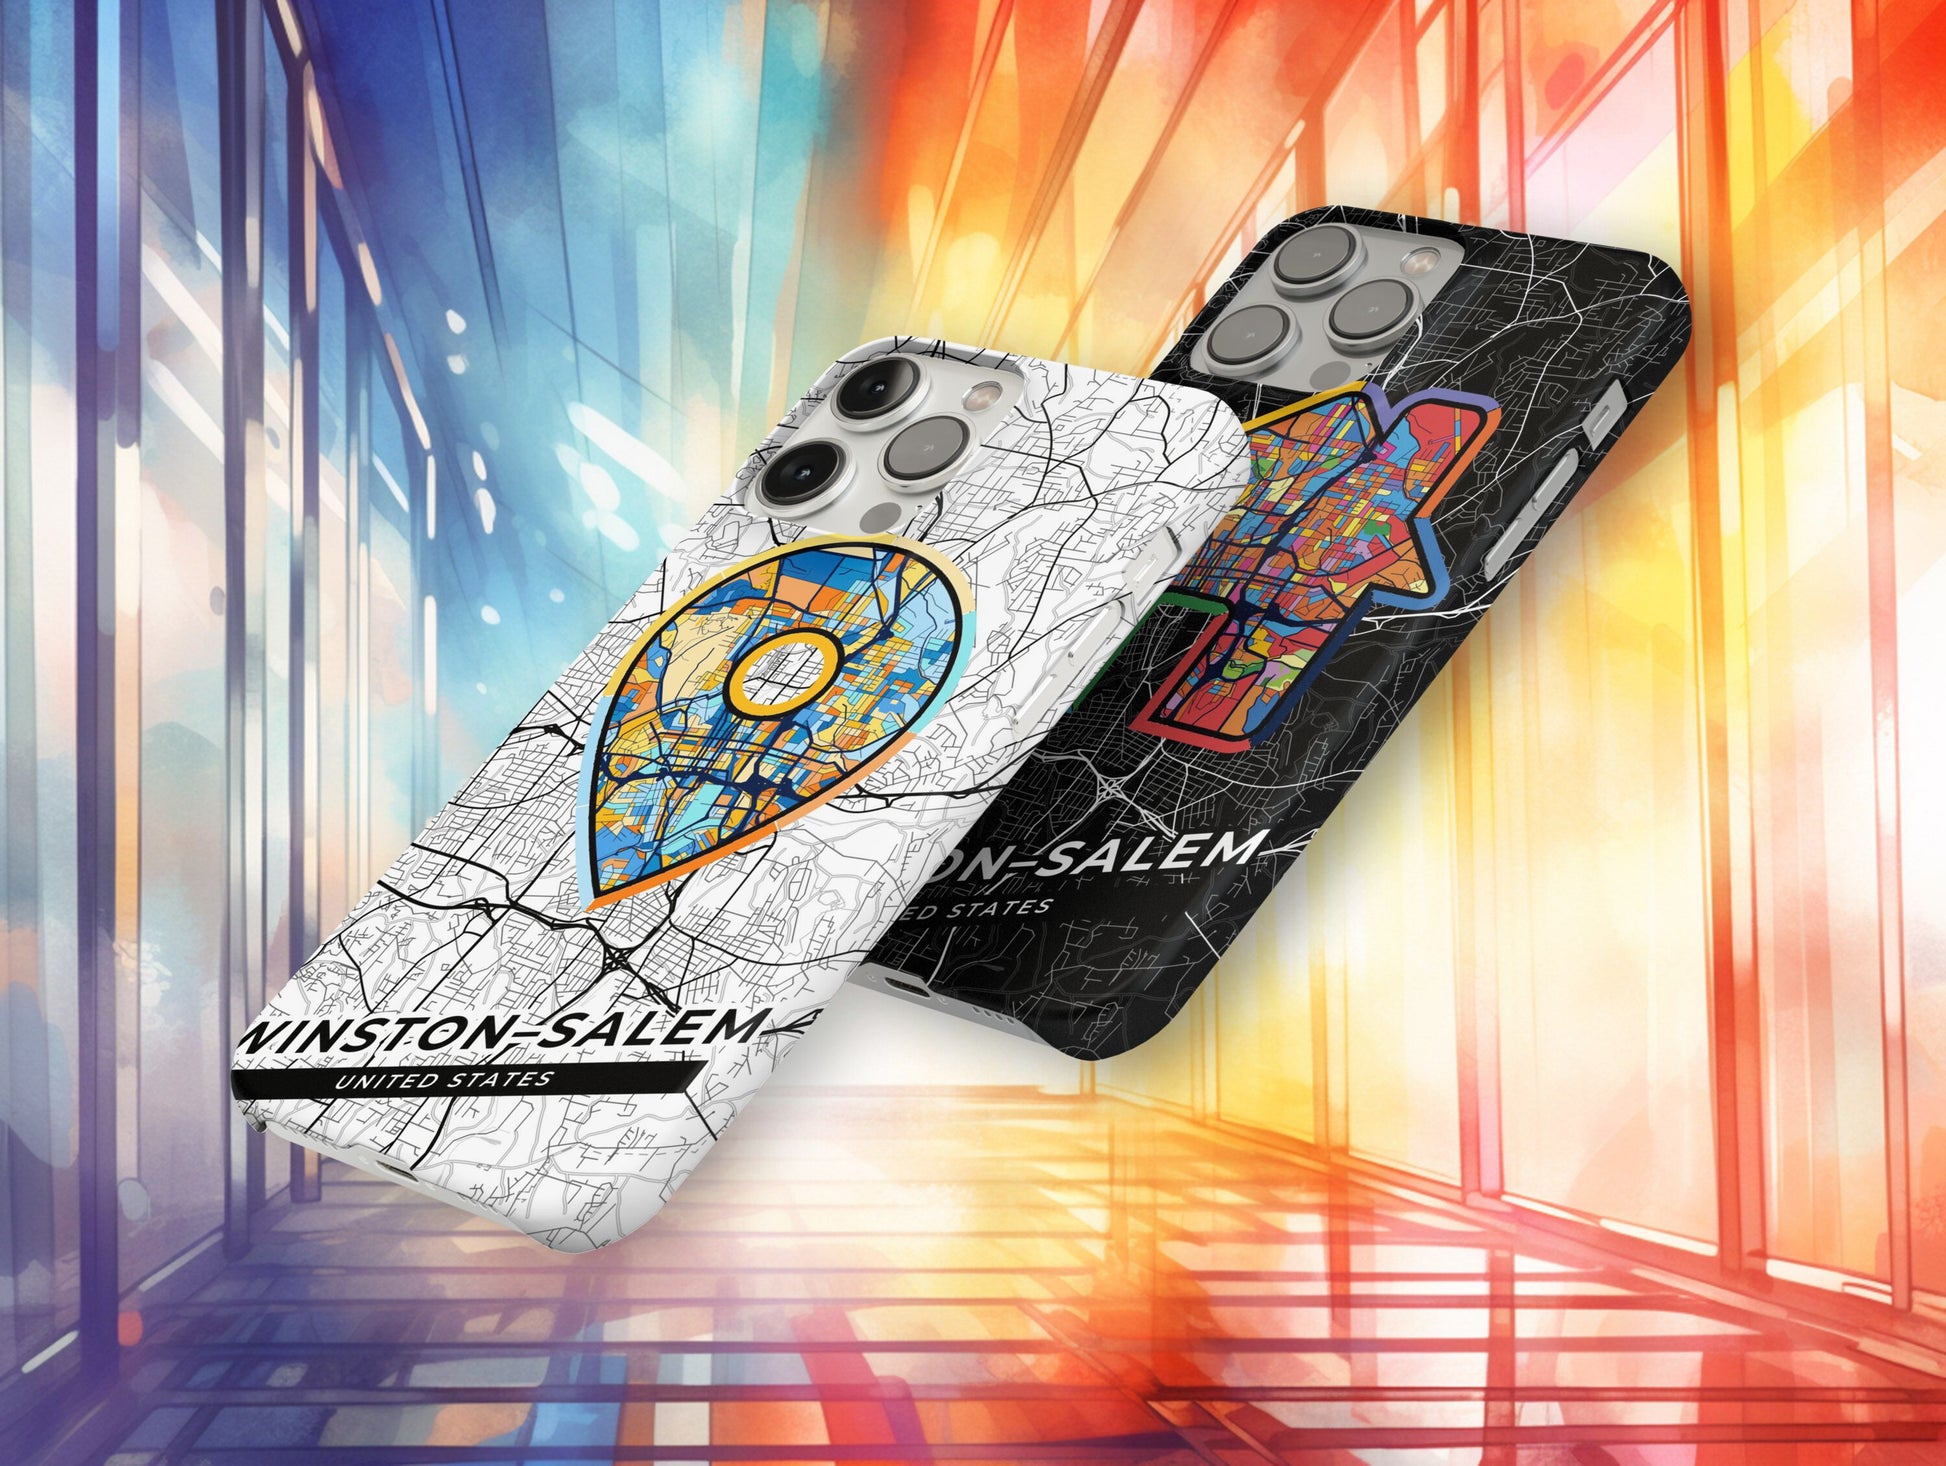 Winston–Salem North Carolina slim phone case with colorful icon